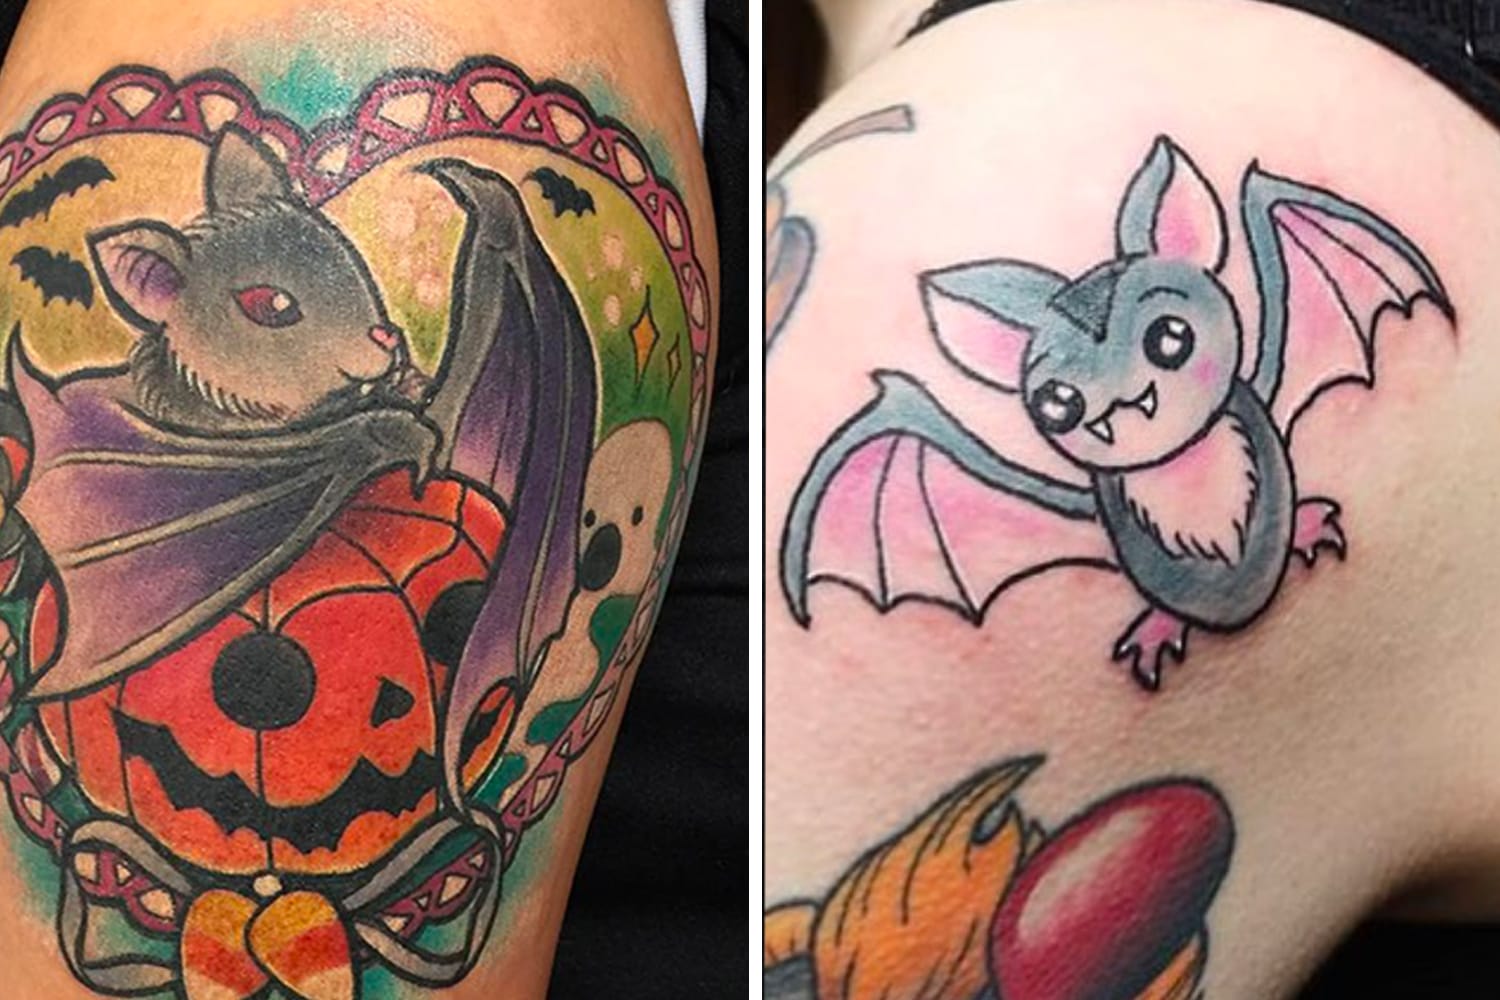 JMV on X  Cute and simple Halloween bats tattoo  halloweentattoos tattoos bats halloweenart prettytattoos  ilovehalloween halloweenlovers shorthalloweenstories  httpstco16nx0Di8ni  X